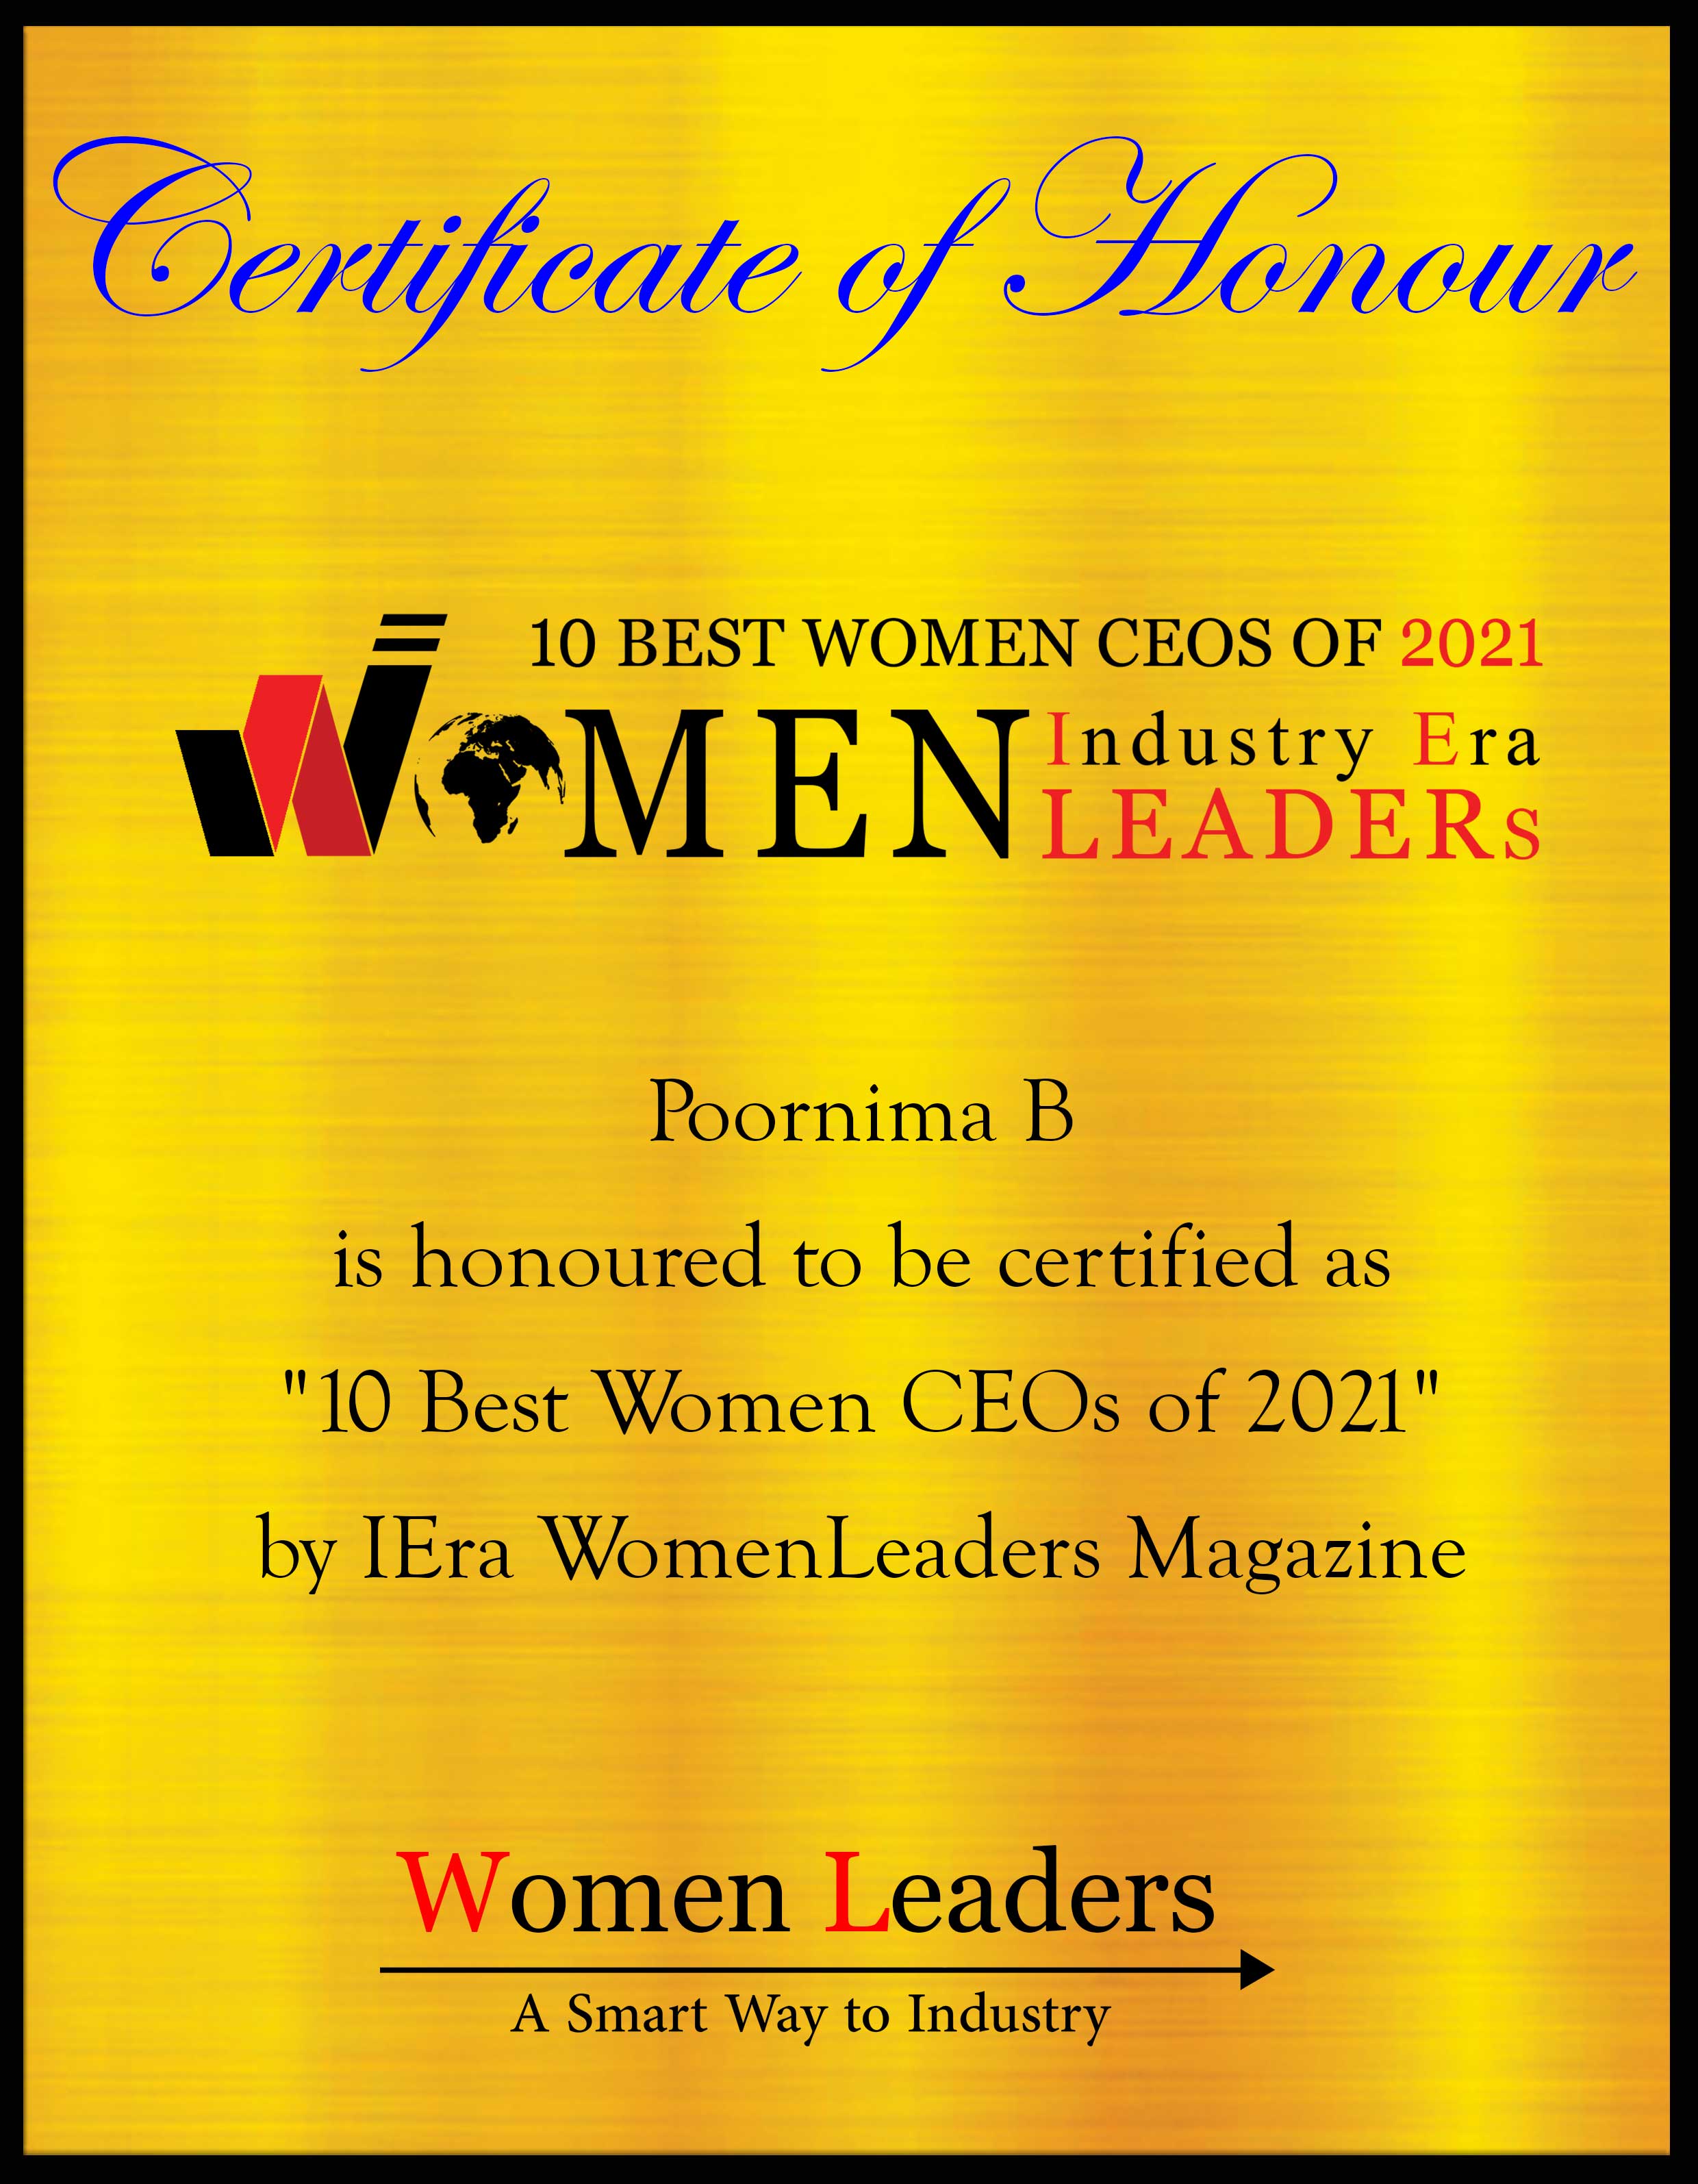 Poornima B, Co-Founder / CEO of InsighTEK Global, Best Women CEOs of 2021